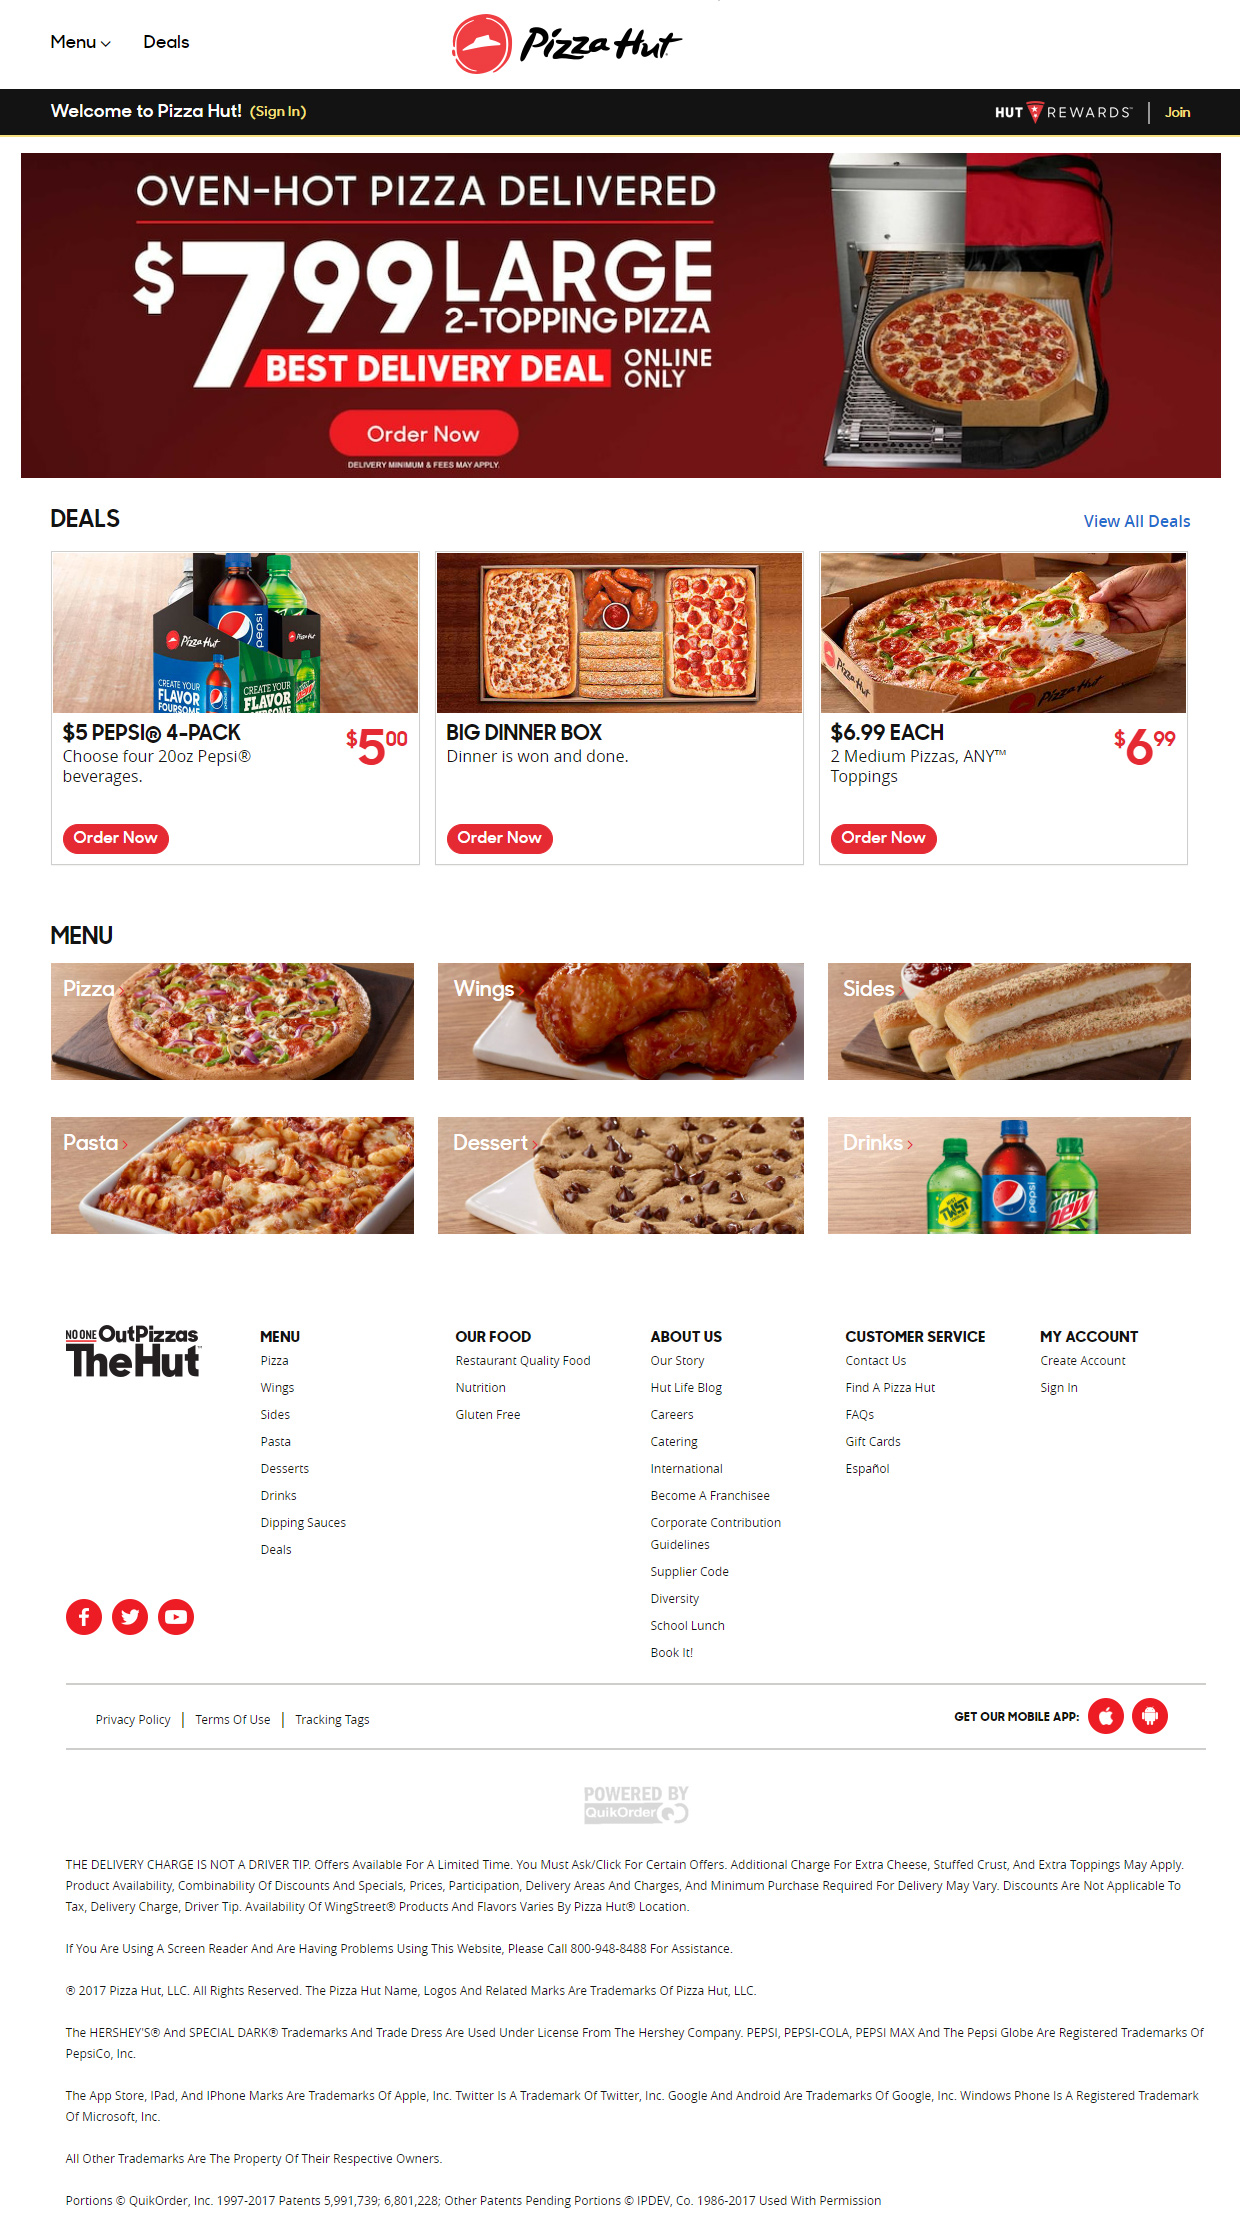 Pizza Hut website in 2017